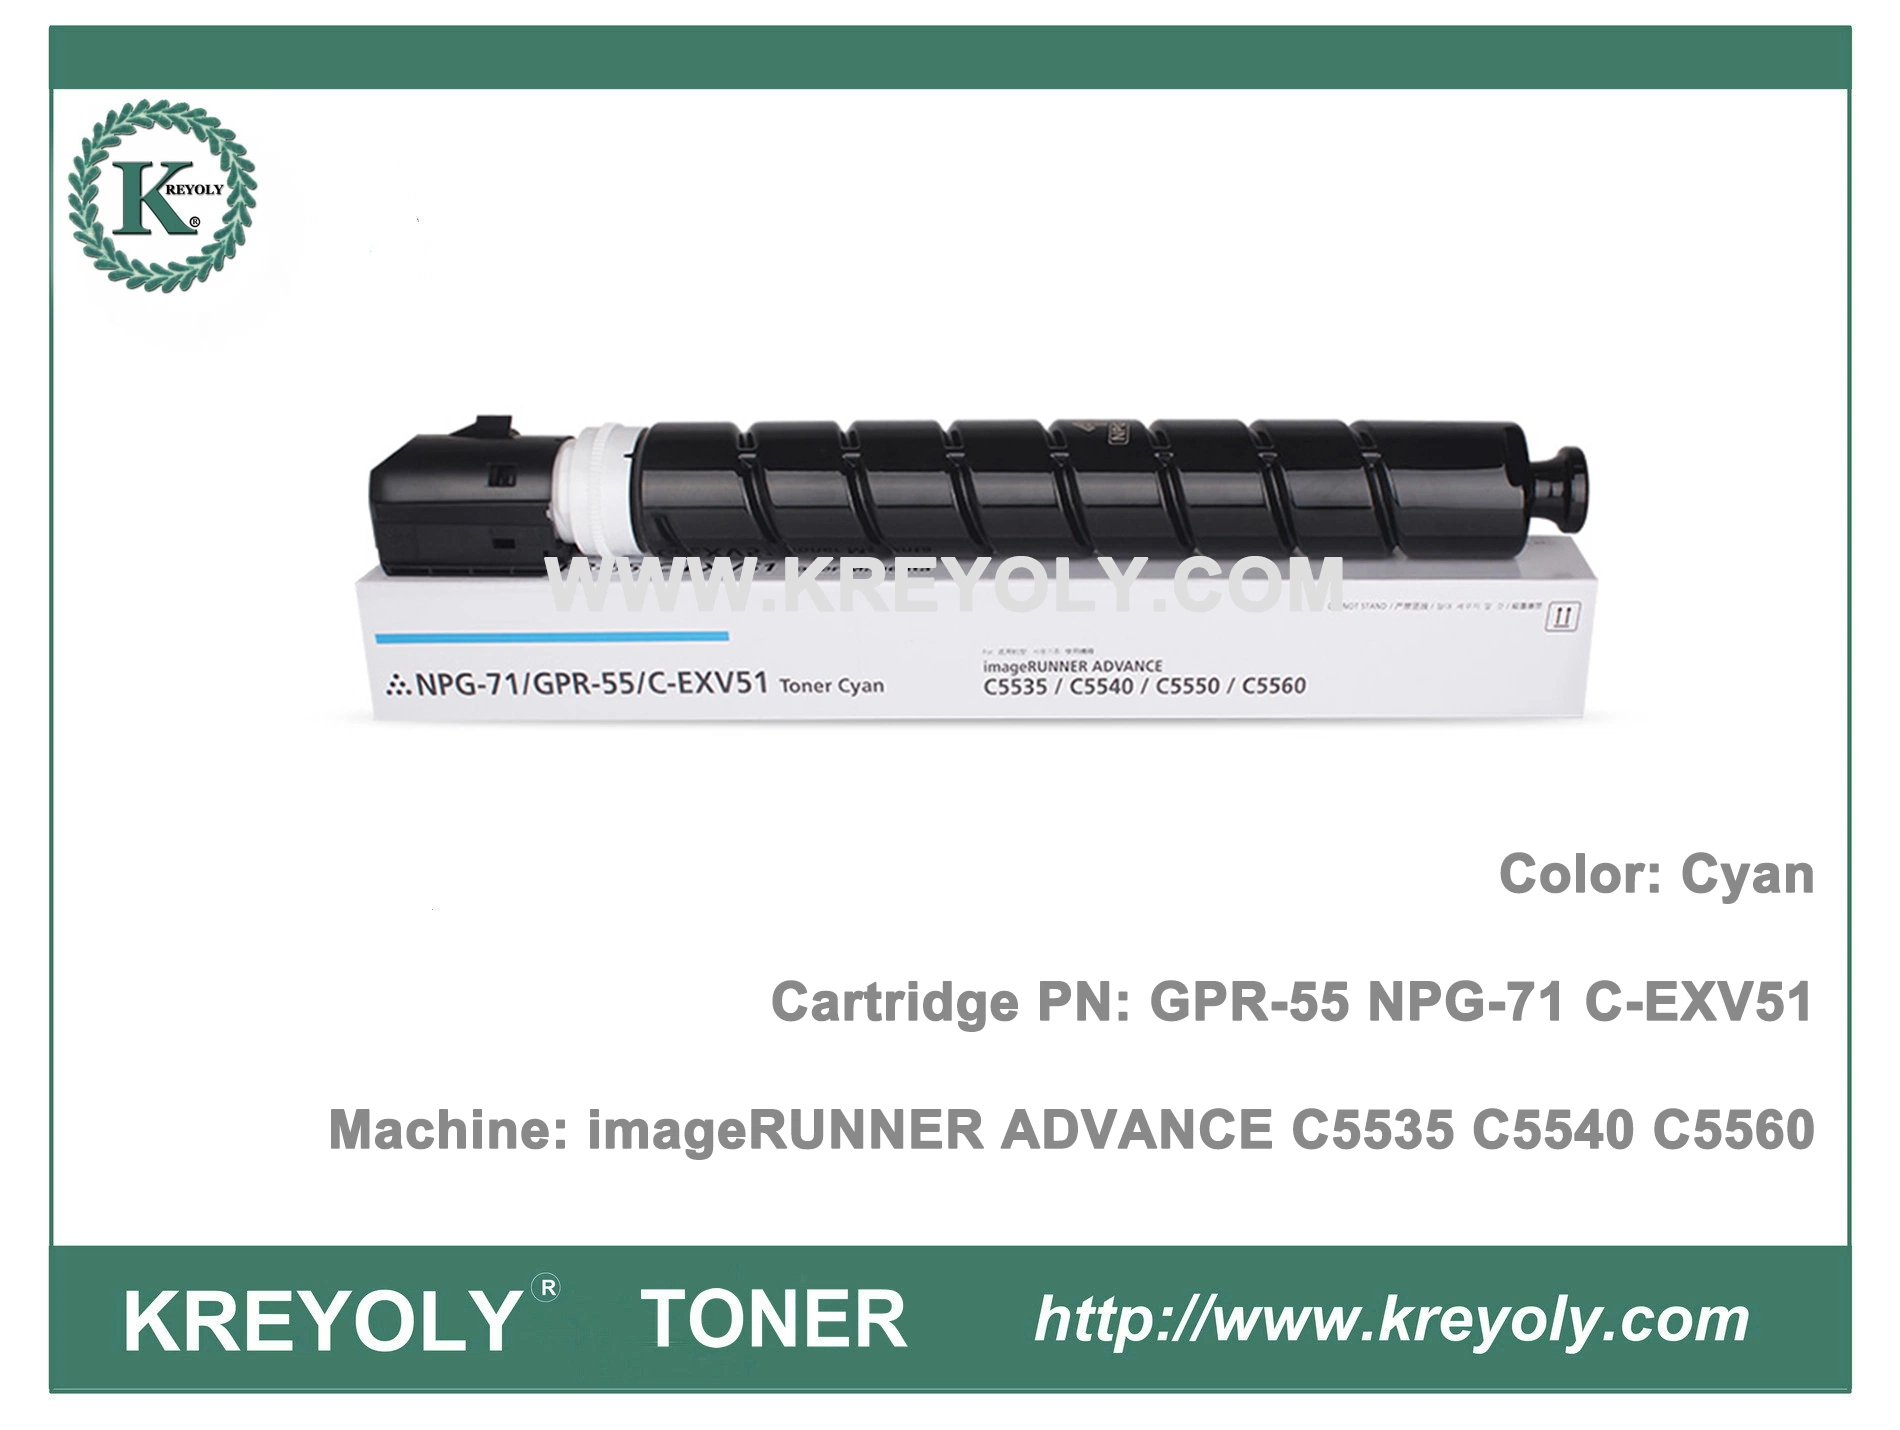 NPG71 GPR55 C-EXV51 Cartucho de tóner para impresora imageRunner ADVANCE C5560 C5550 C5540 C5535